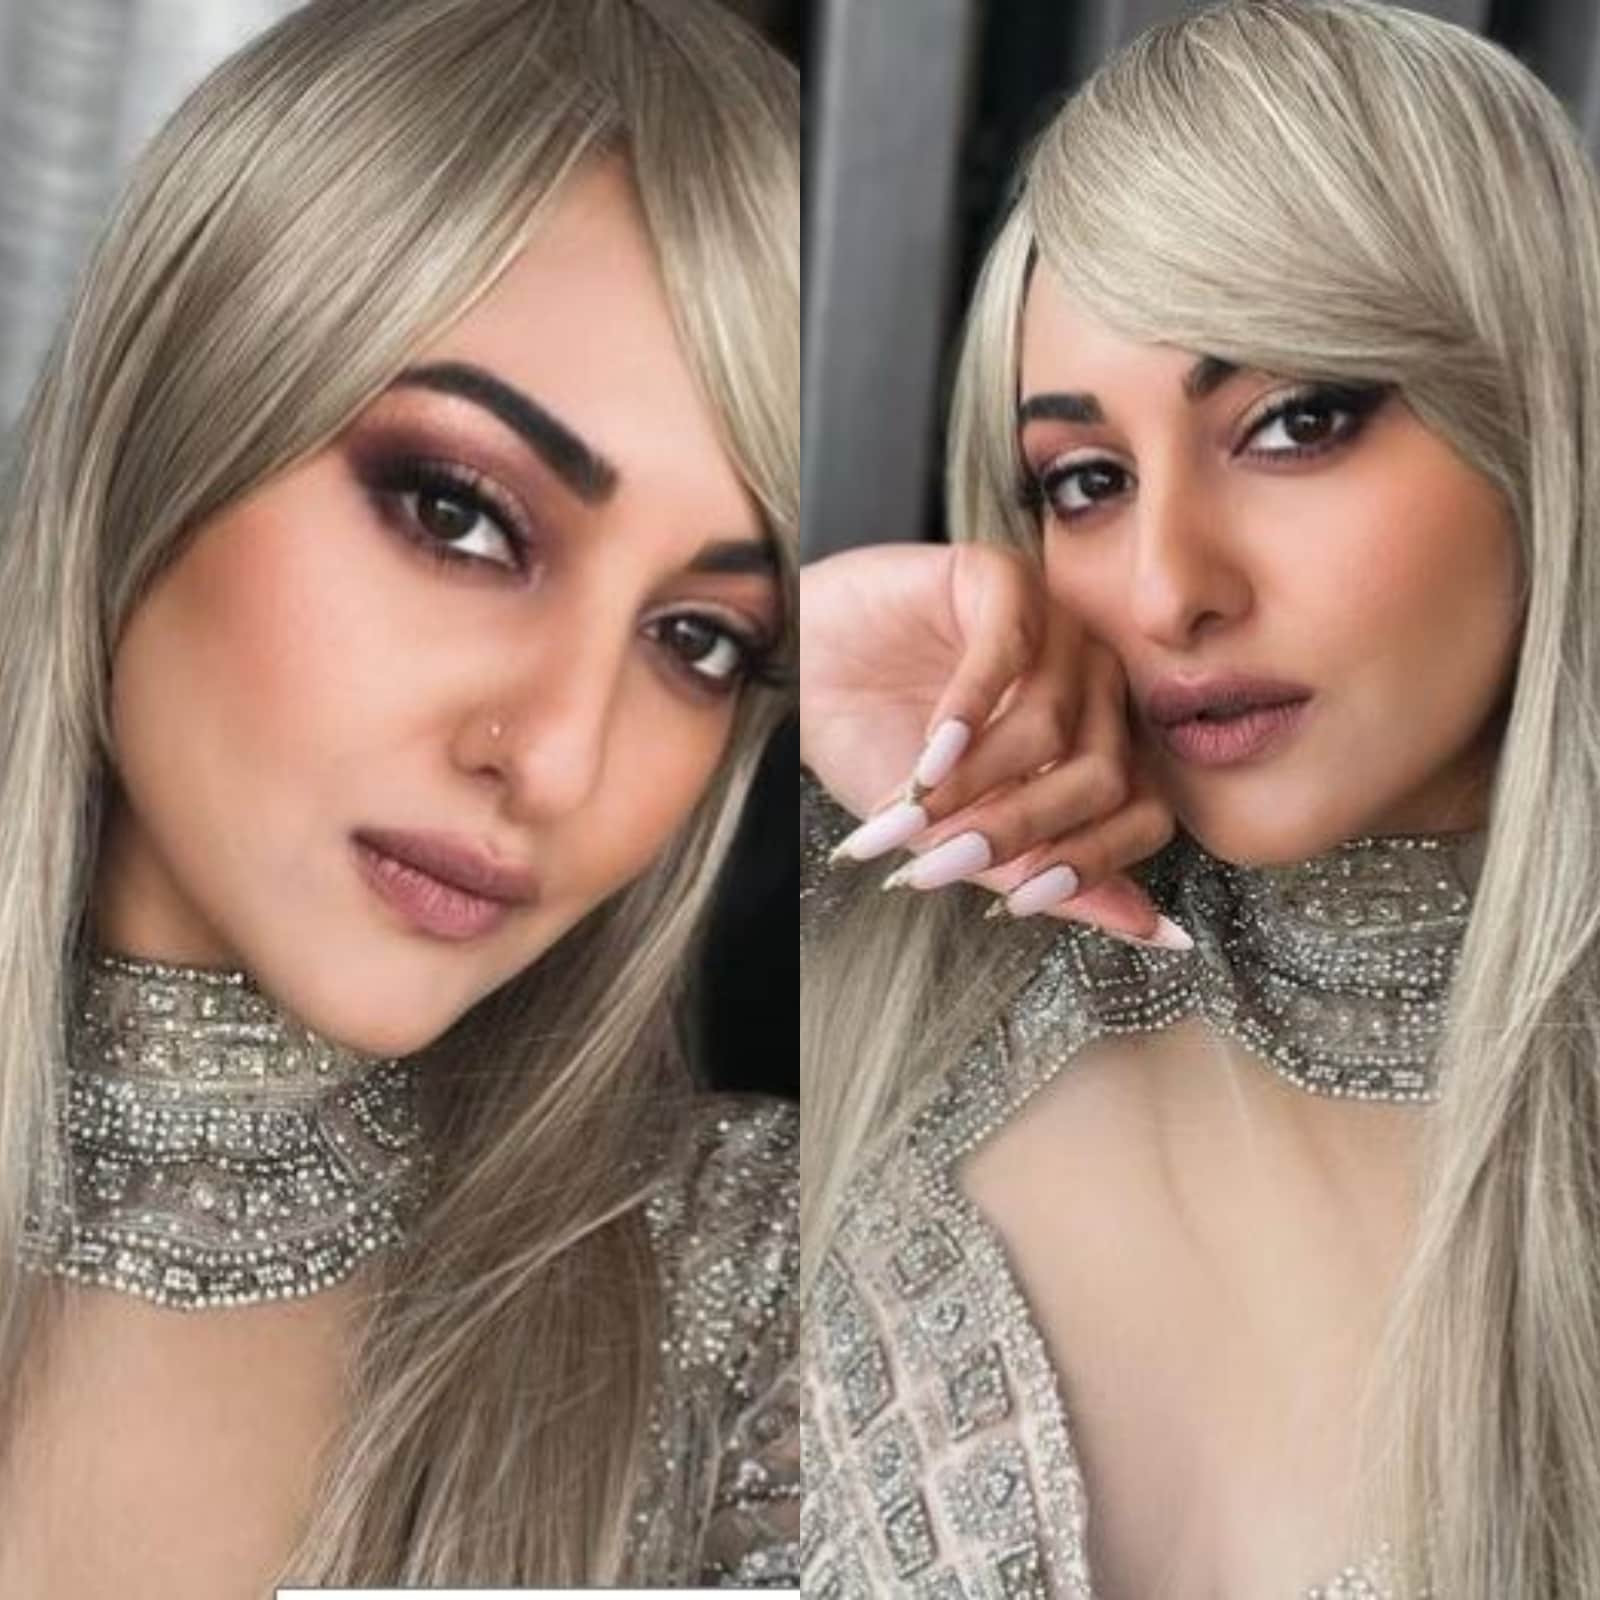 Sonakshi Sinha X Video Hd - Sonakshi Sinha Flaunts Her Look in Blonde Hair in Latest Instagram Post,  See Pics - News18